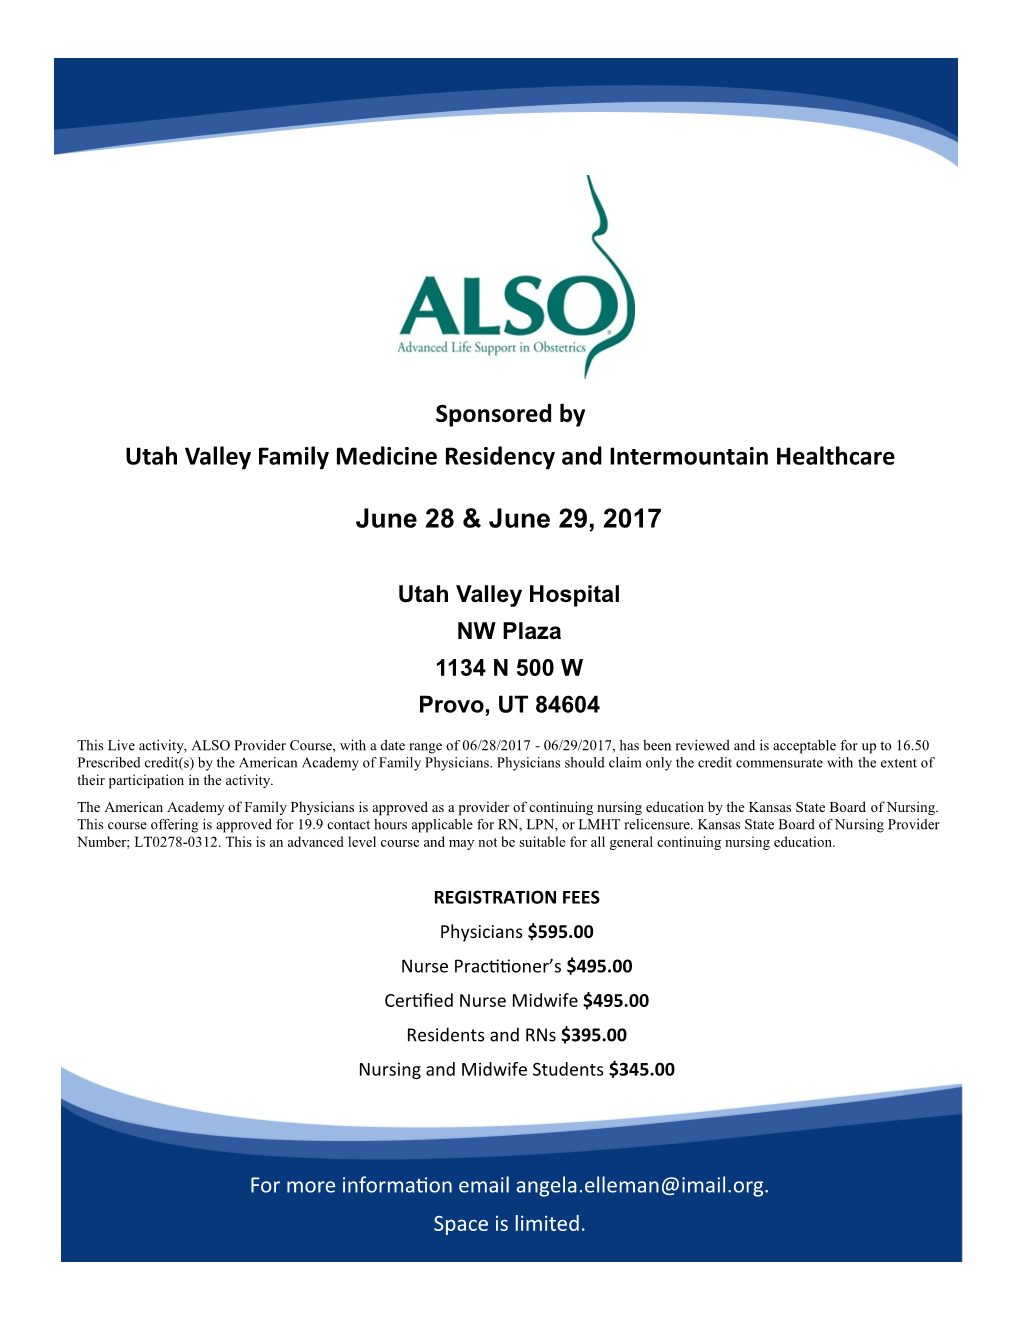 June 28 & June 29, 2017 Sponsored by Utah Valley Family Medicine